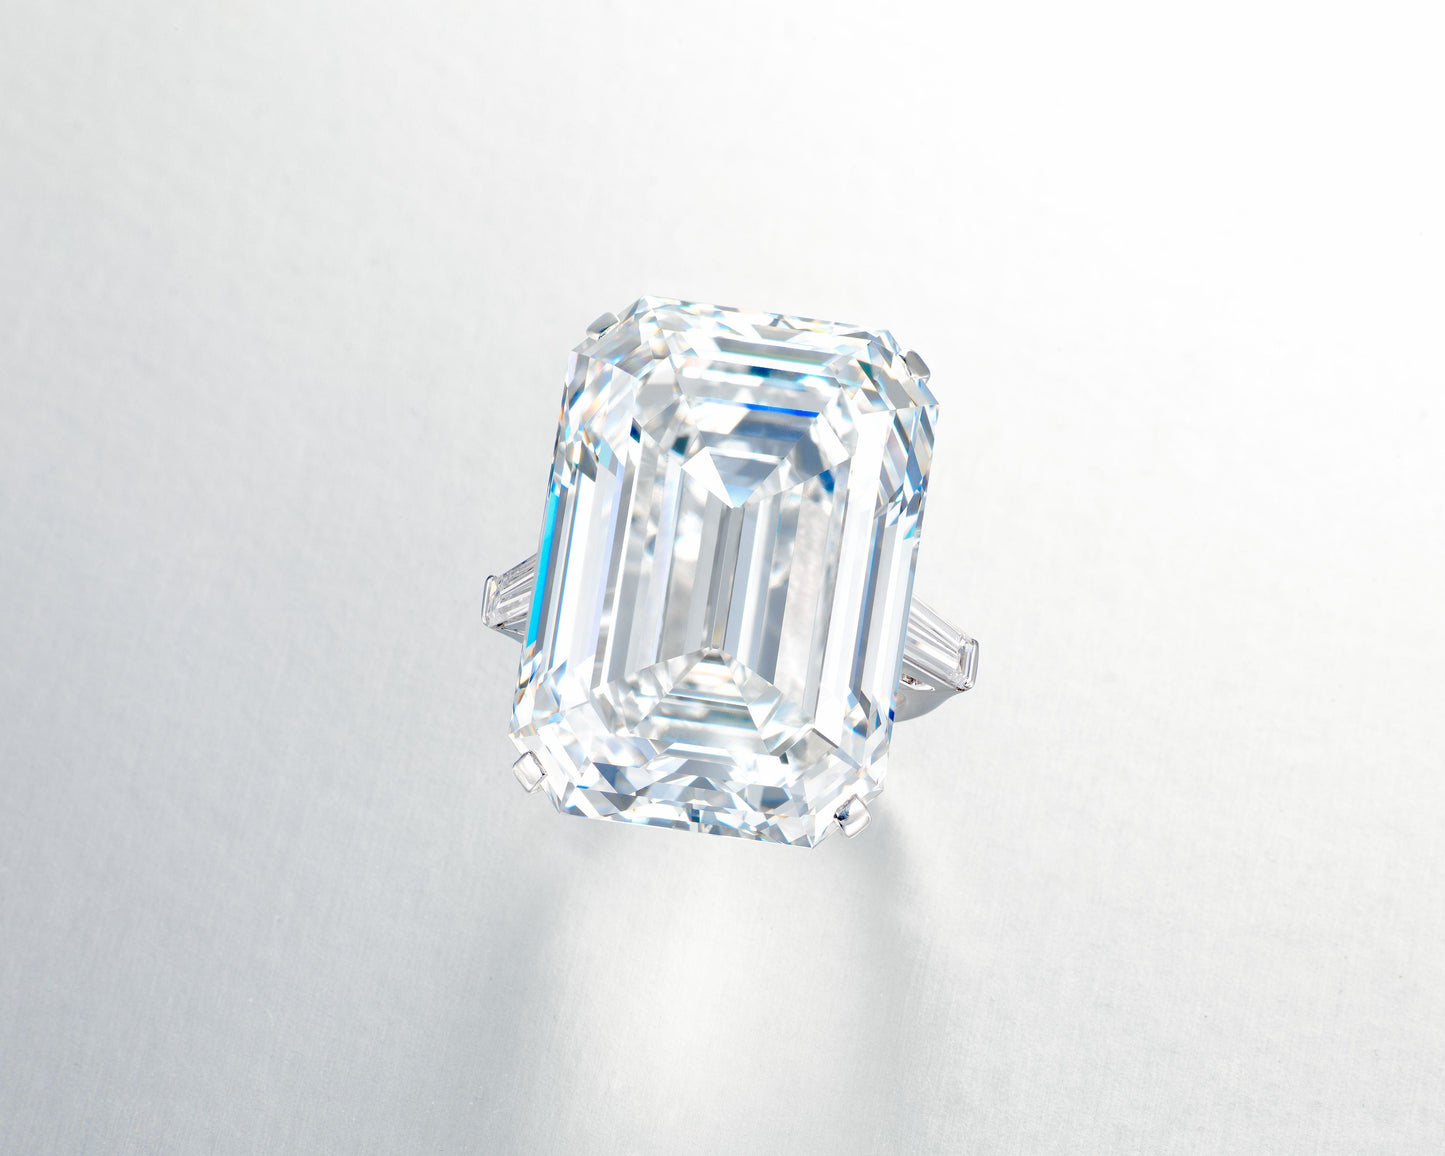 48.77 carat Emerald Cut Diamond Ring